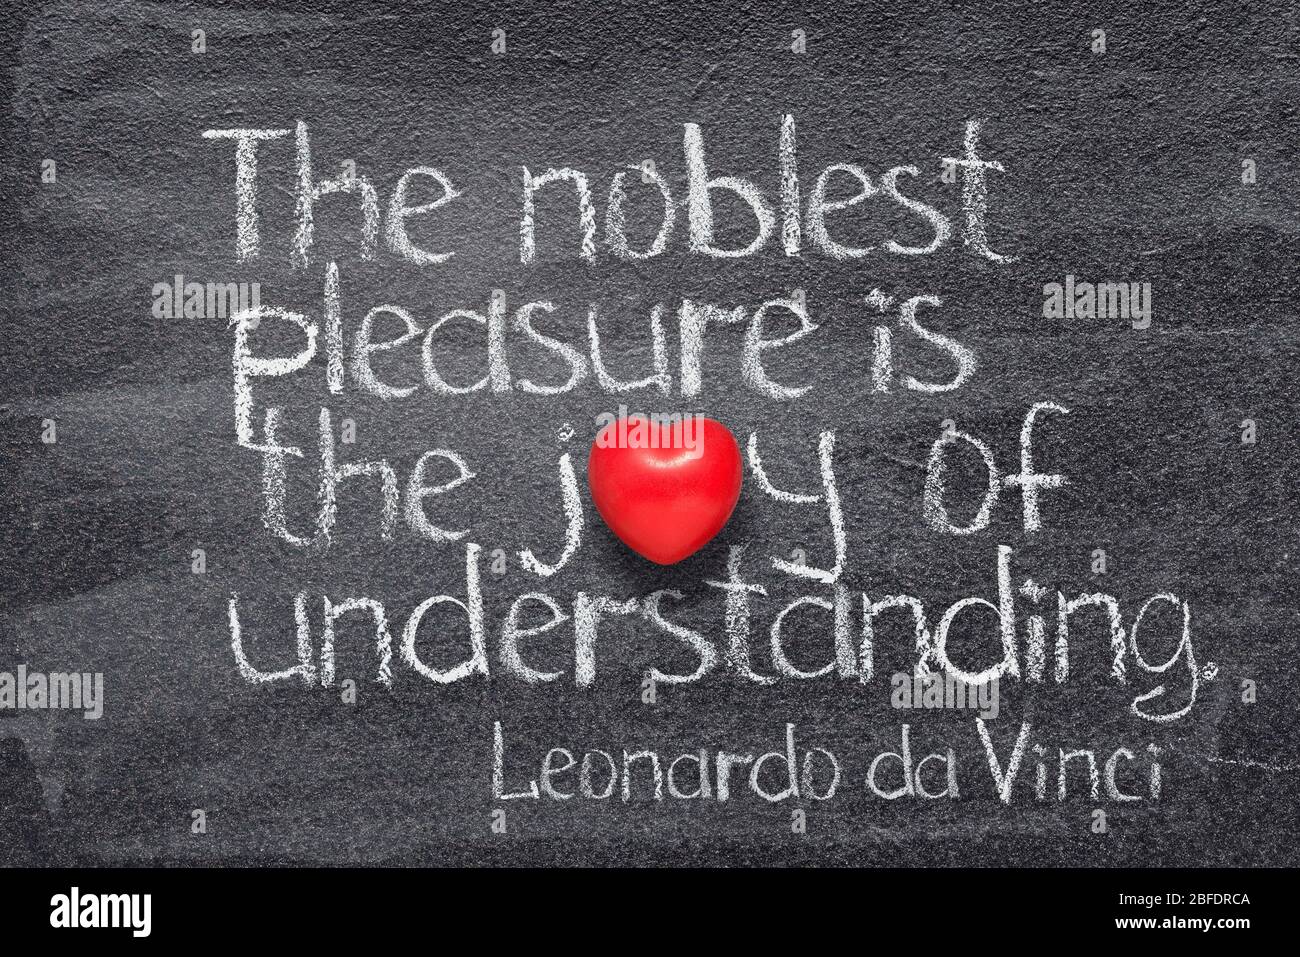 The noblest pleasure is the joy of understanding - ancient Italian artist Leonardo da Vinci quote written on chalkboard with red heart symbol instead Stock Photo